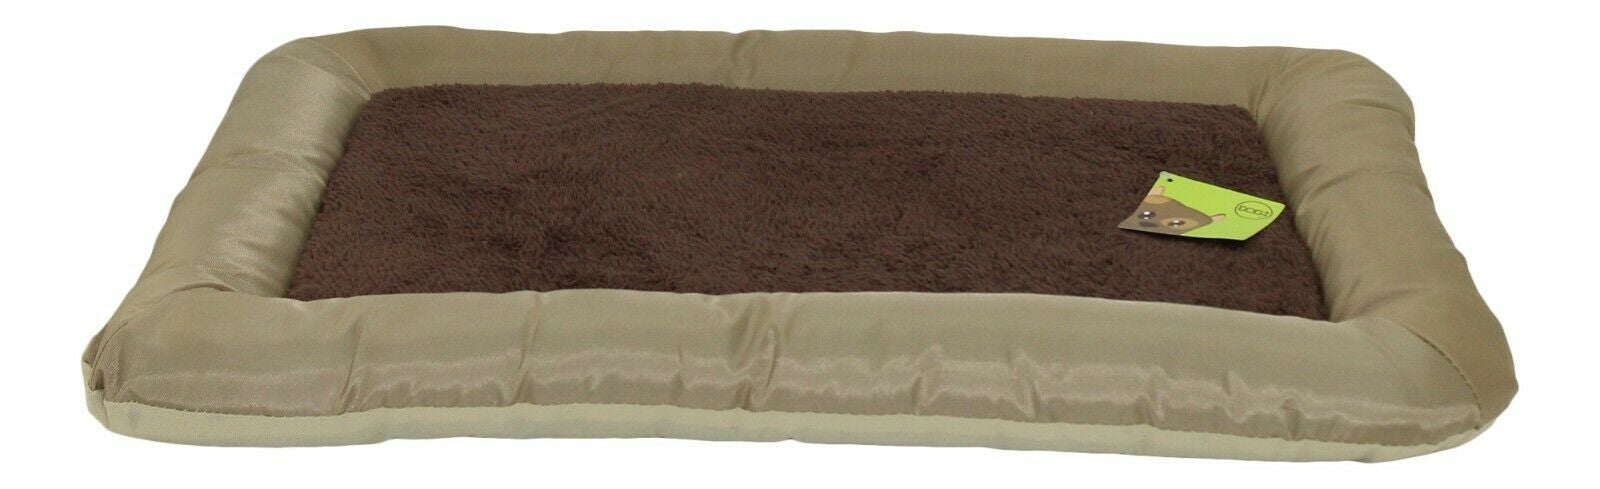 Waterproof Dog Bed Soft Fleece Machine Washable Pet Bed Cushion Luxury Basket